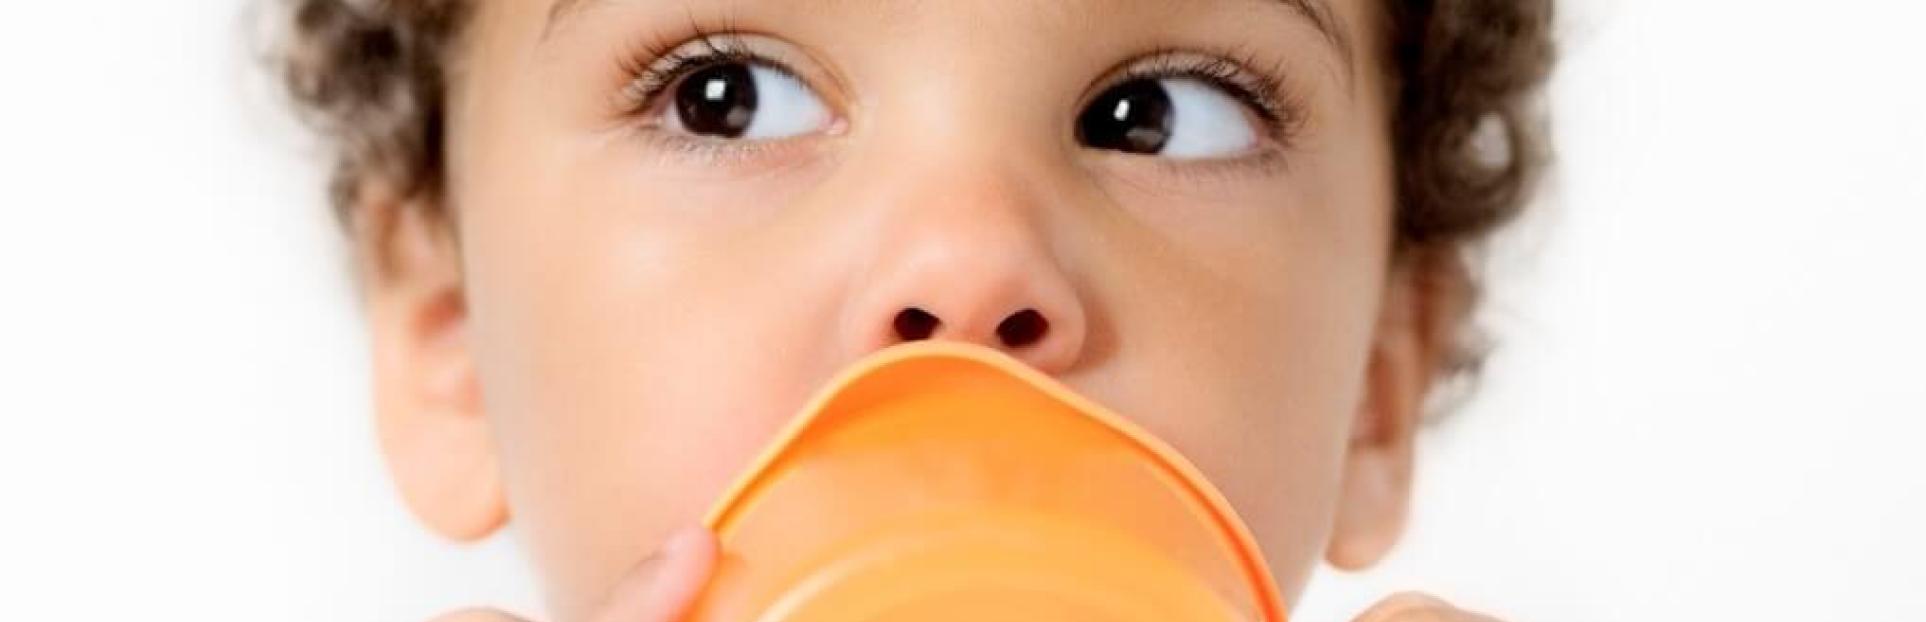 toddler drinking milk